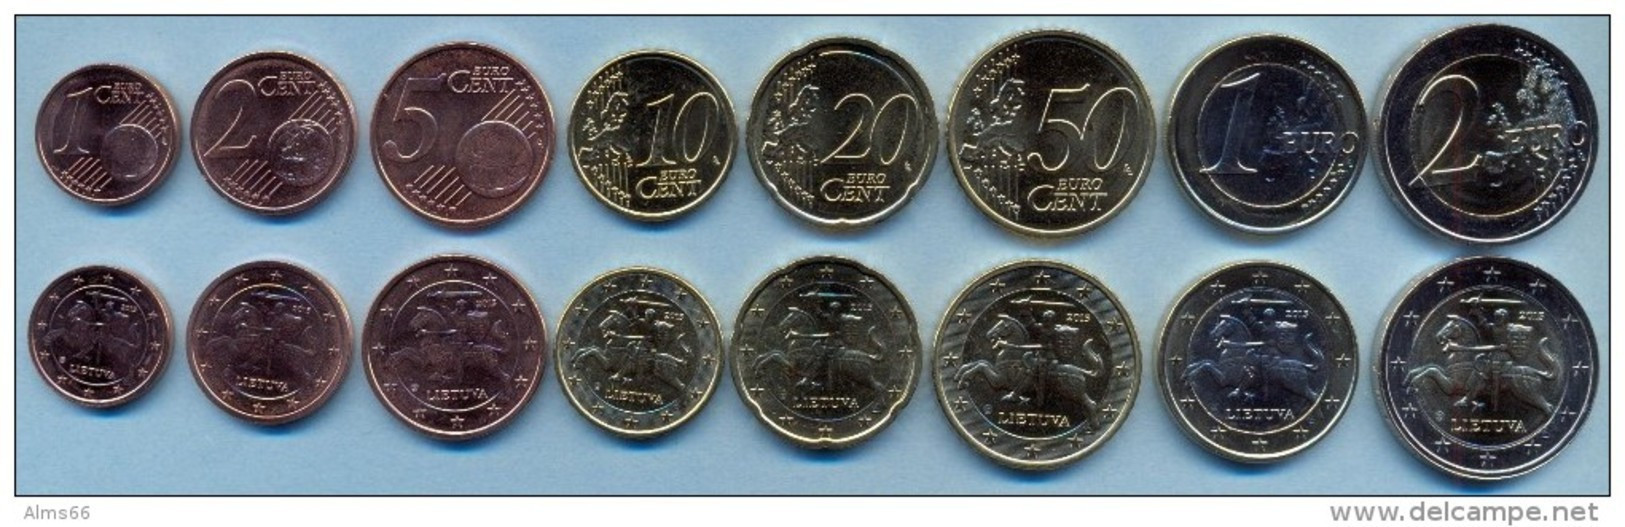 EuroCoins < Lithuania > Euro Set 2015 UNC (8 Coins) - Lithuania